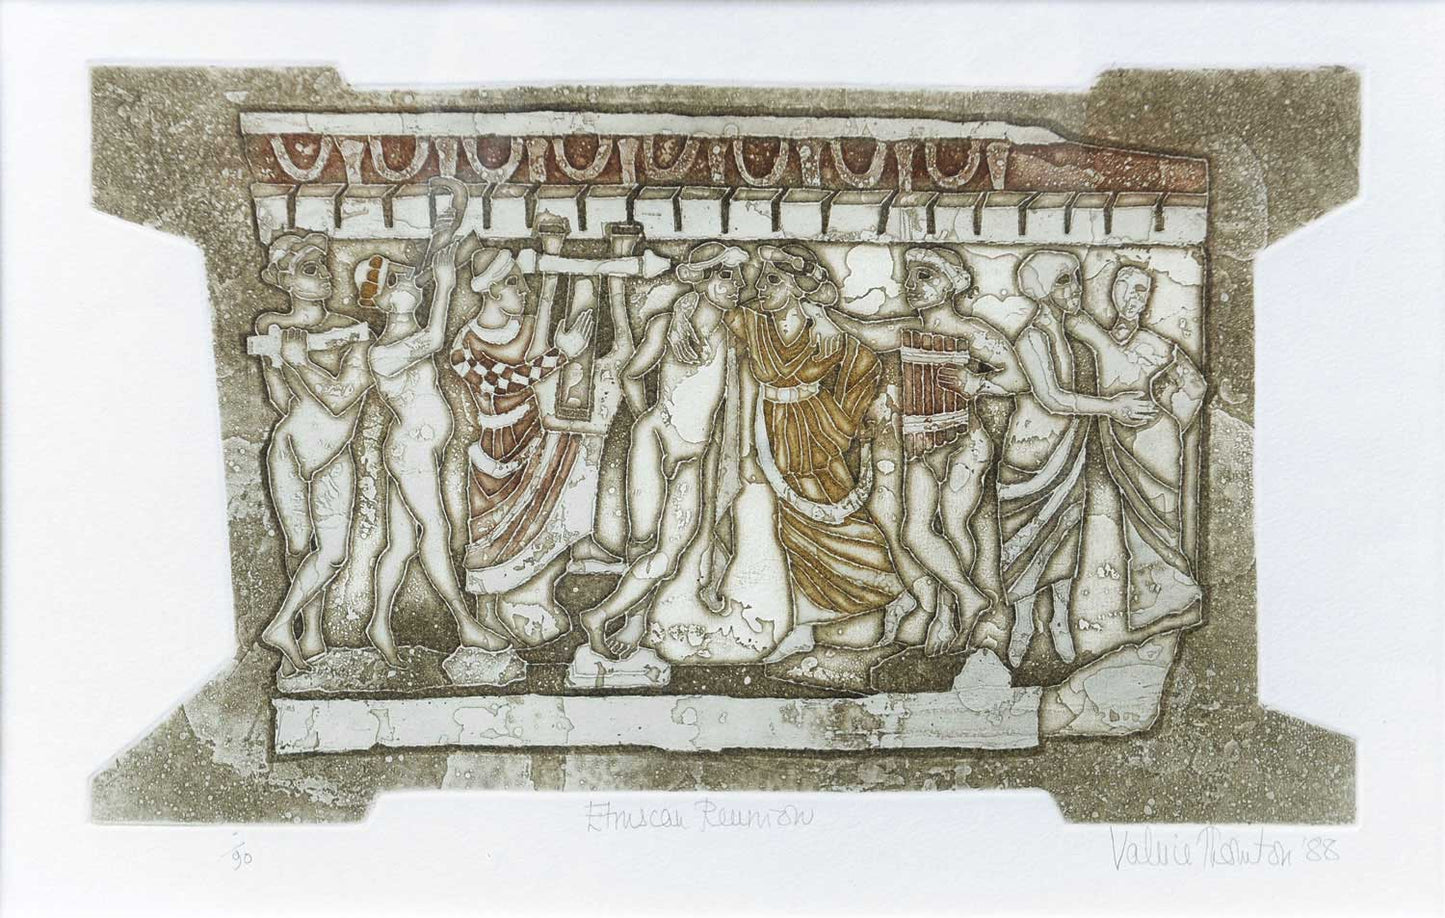 Etruscan Reunion